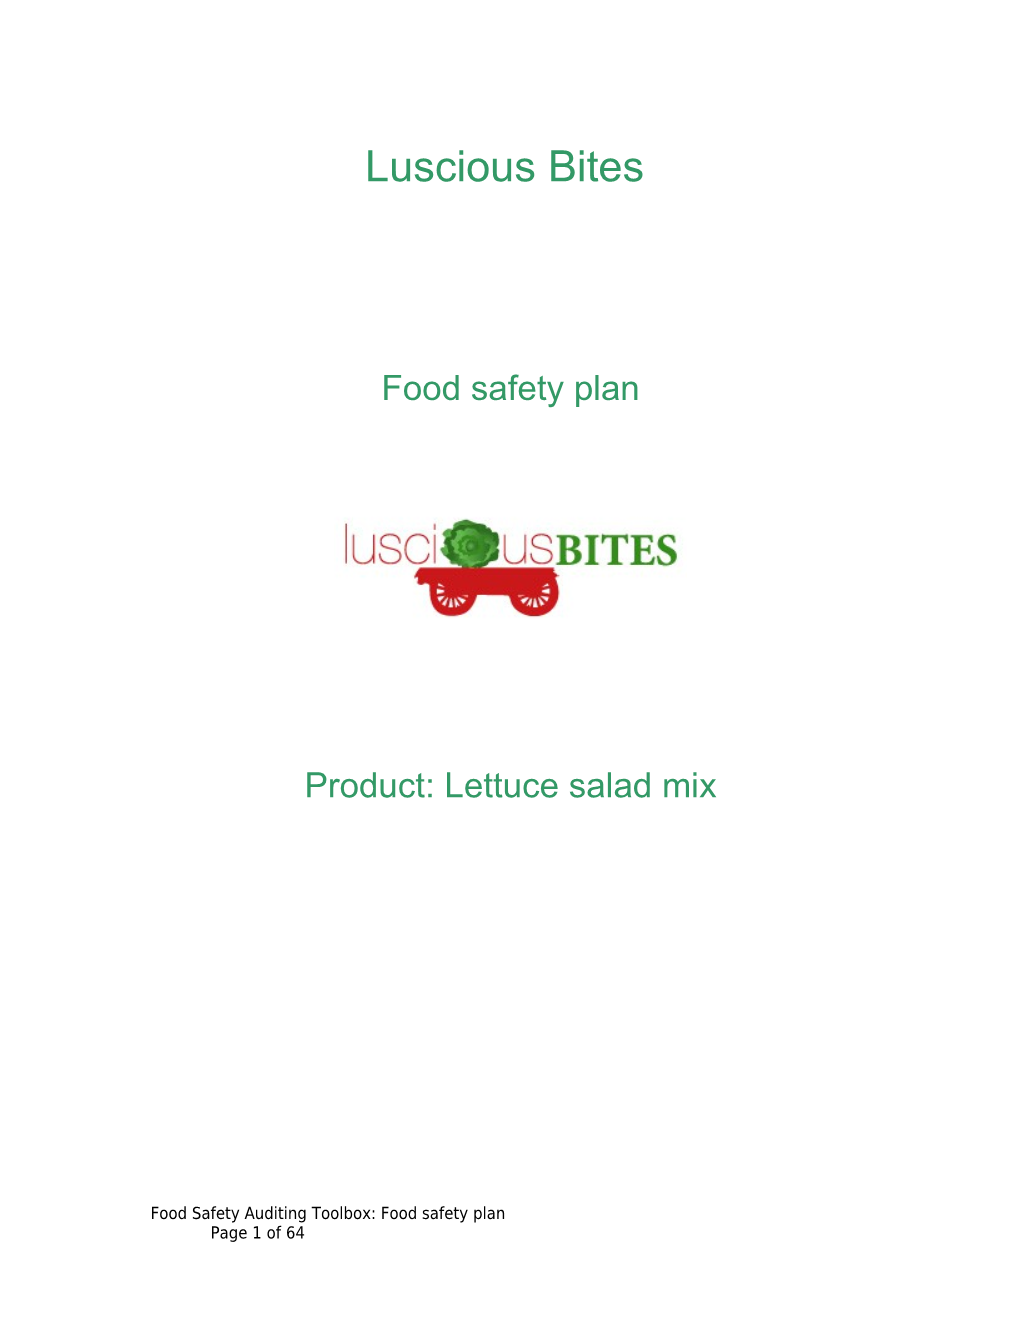 Product: Lettuce Salad Mix